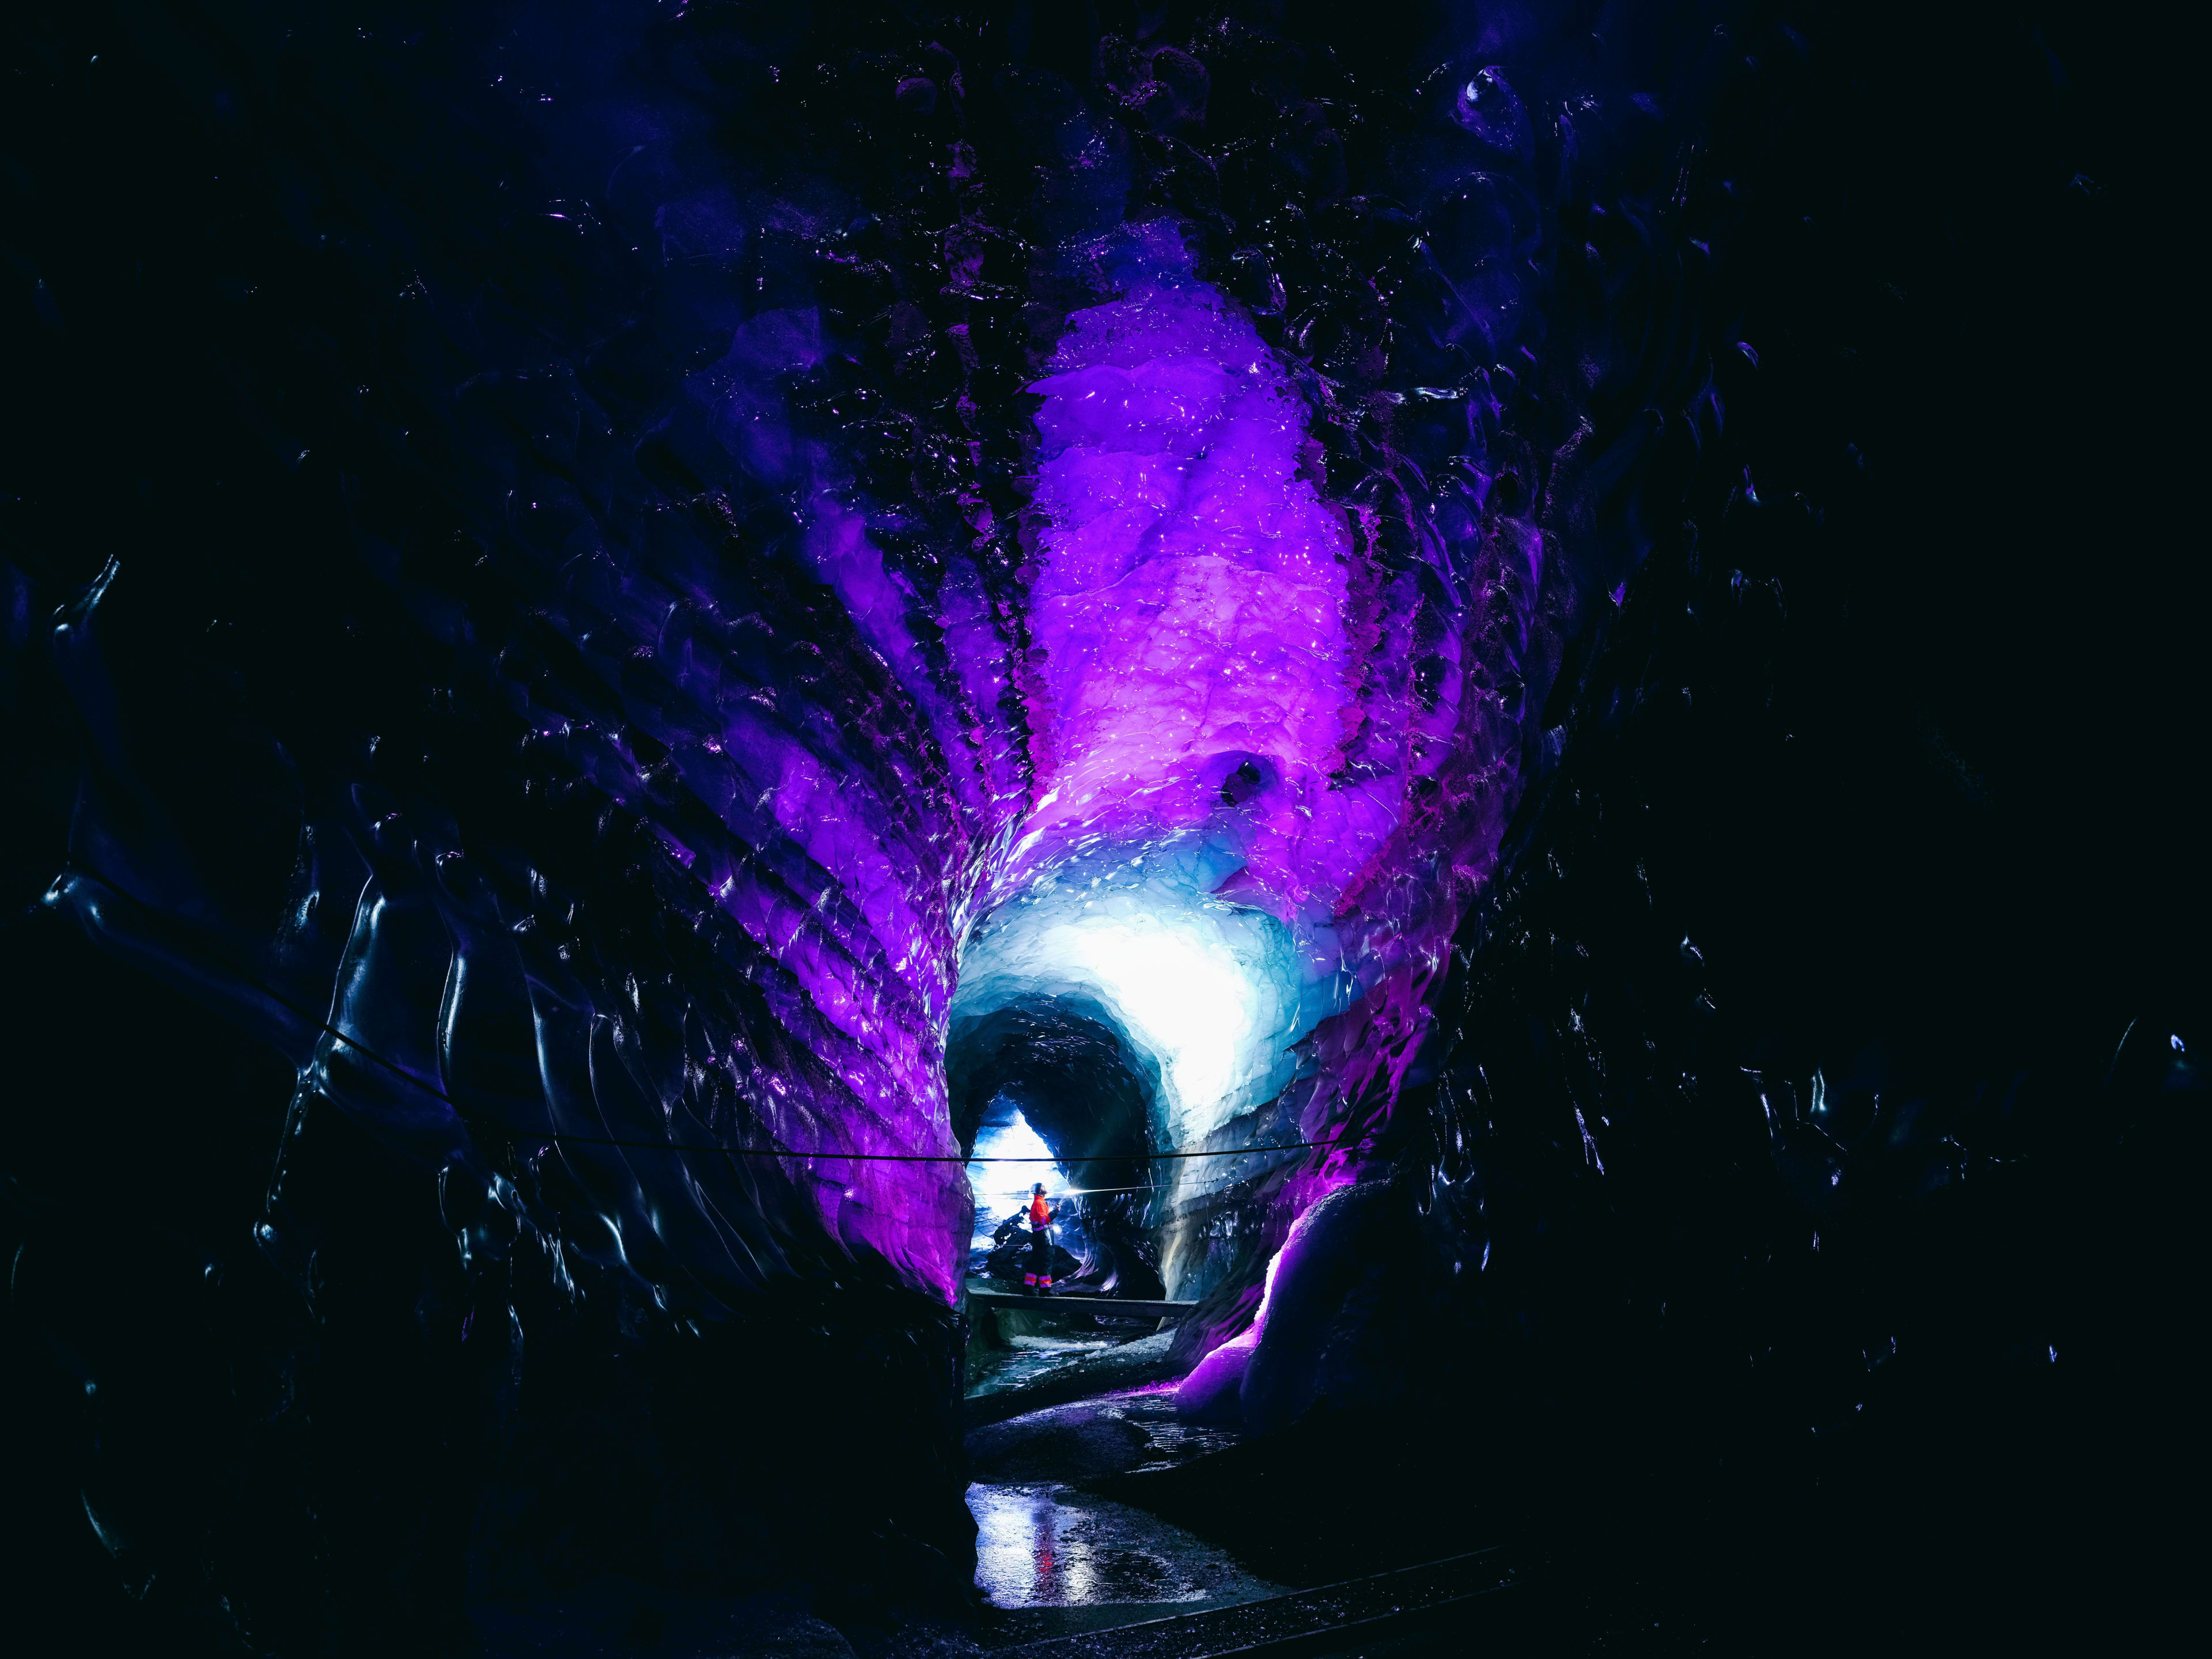 Katla ice cave with a purple glow